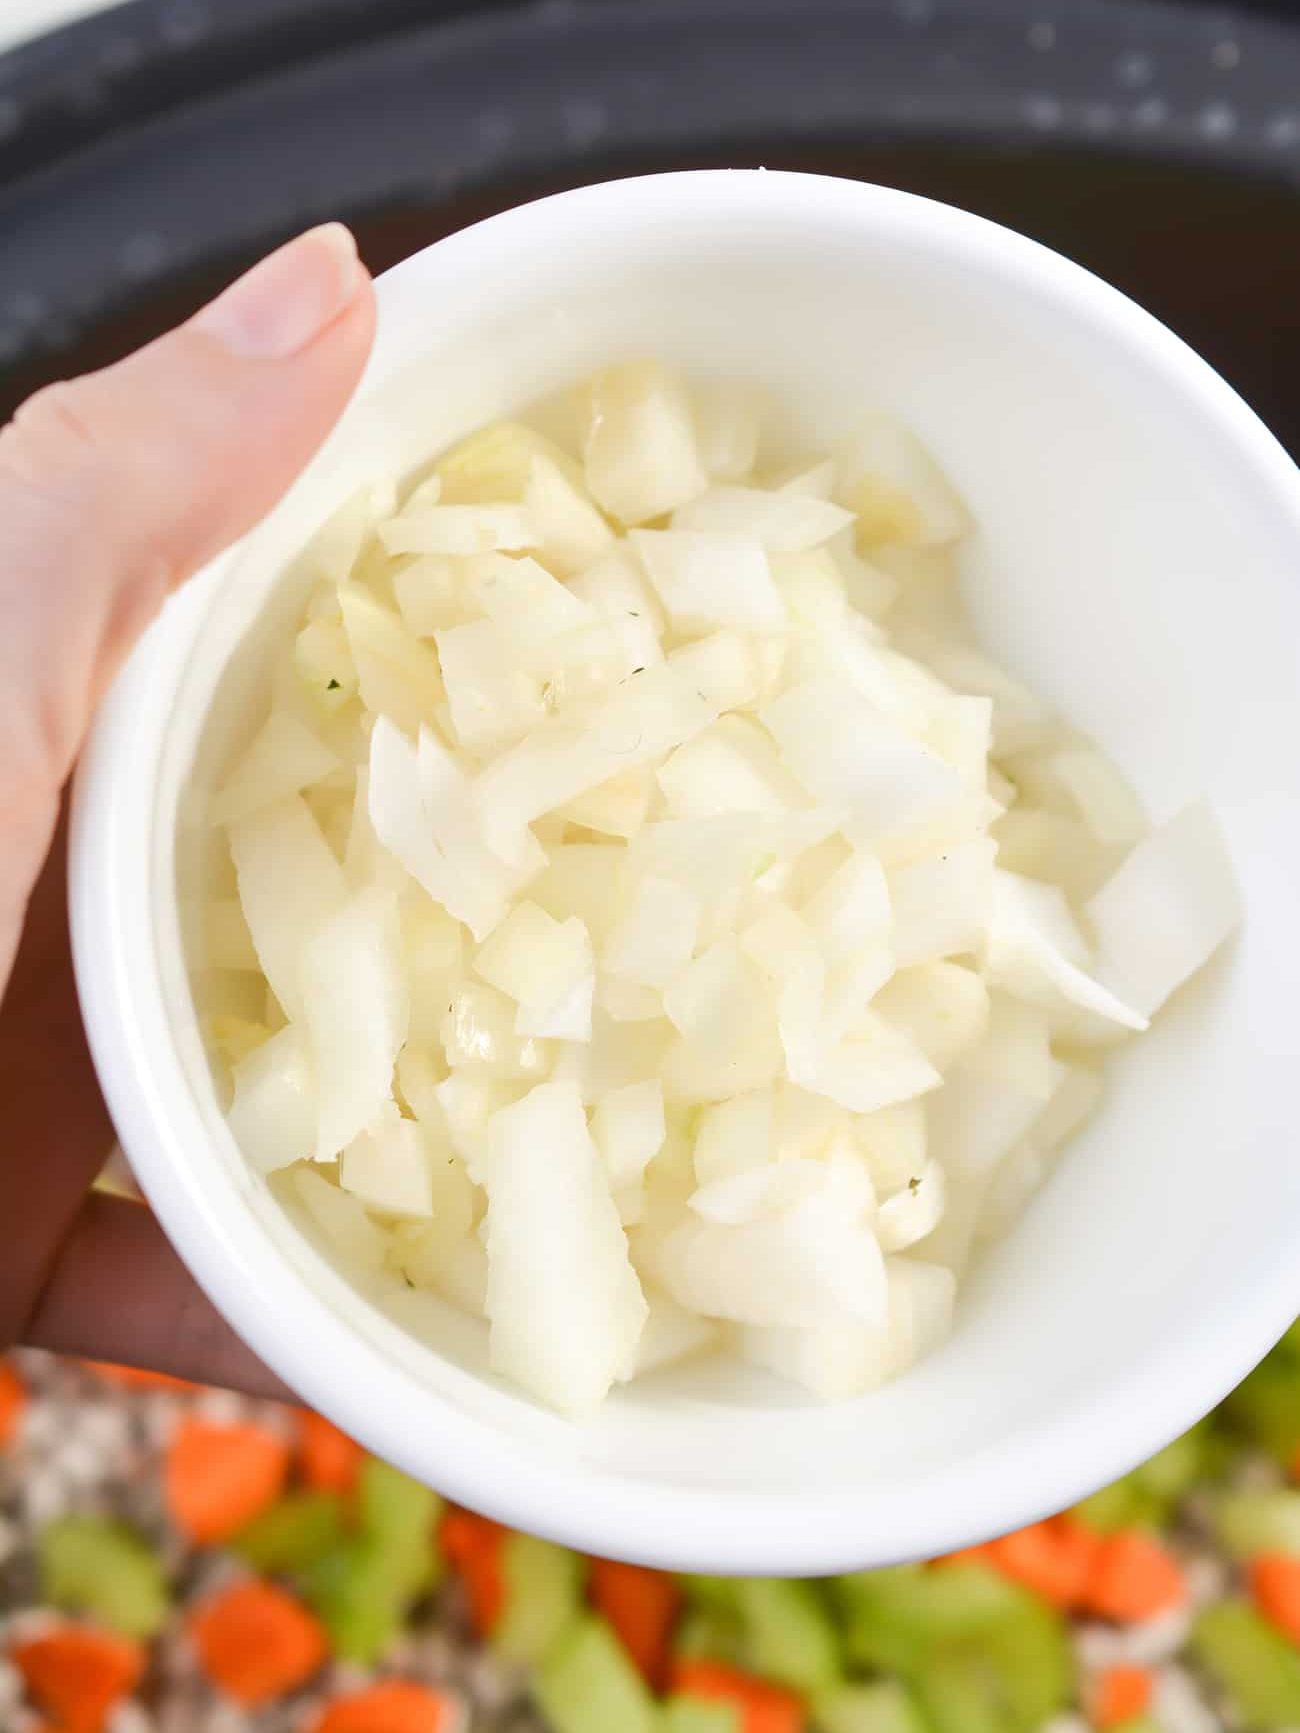 add 1 onion chopped.